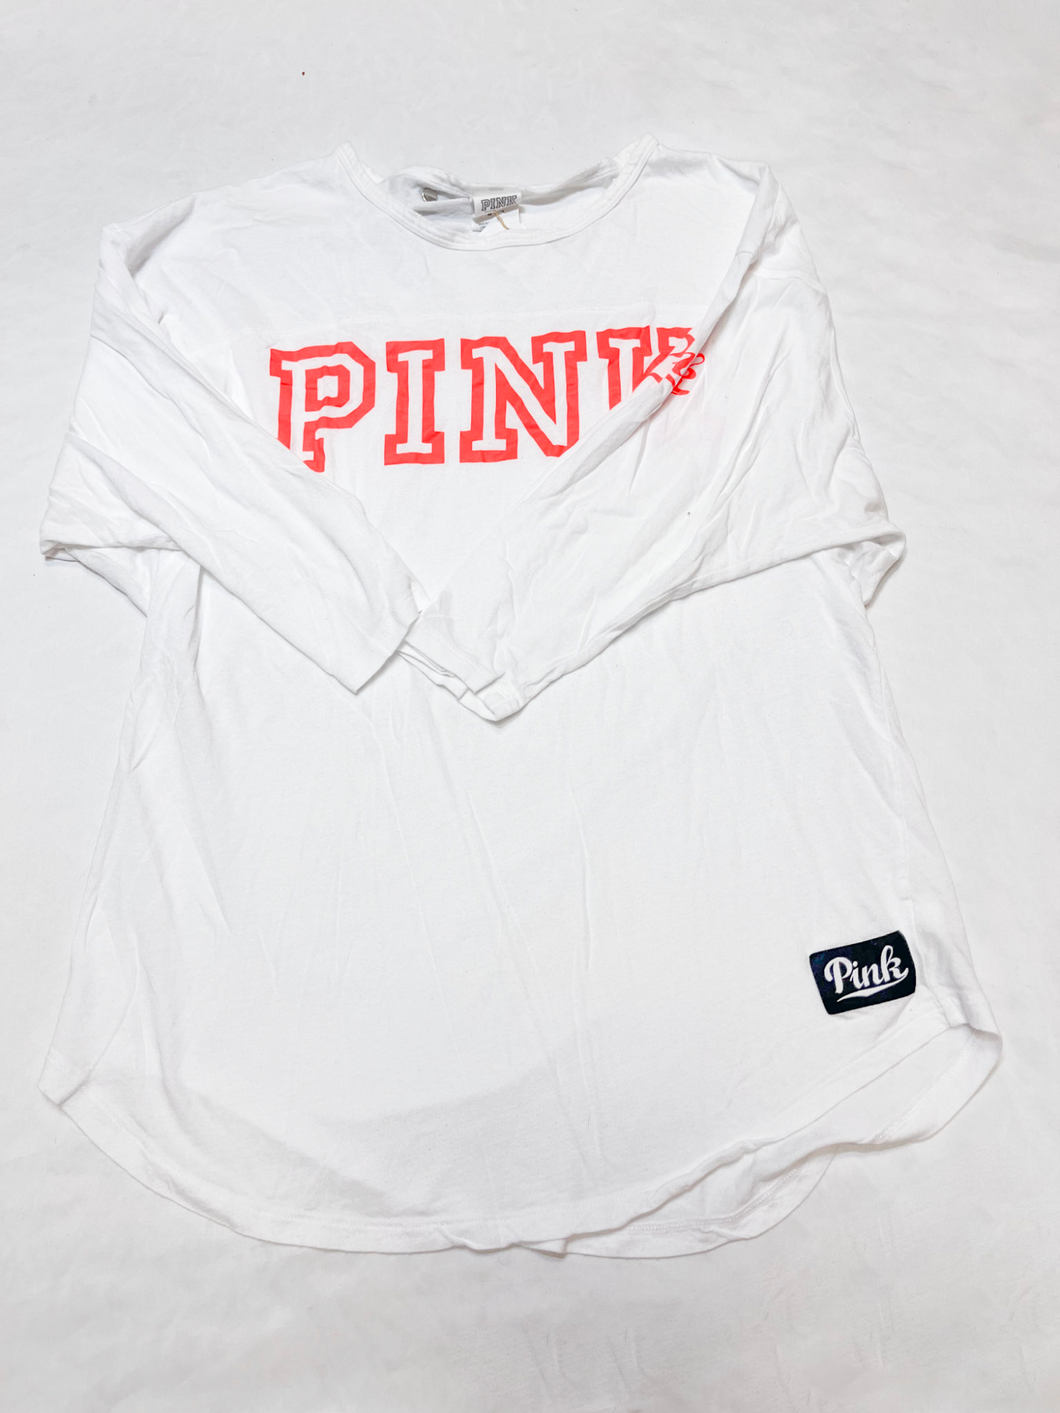 Pink By Victoria's Secret Long Sleeve T-Shirt Size Medium *